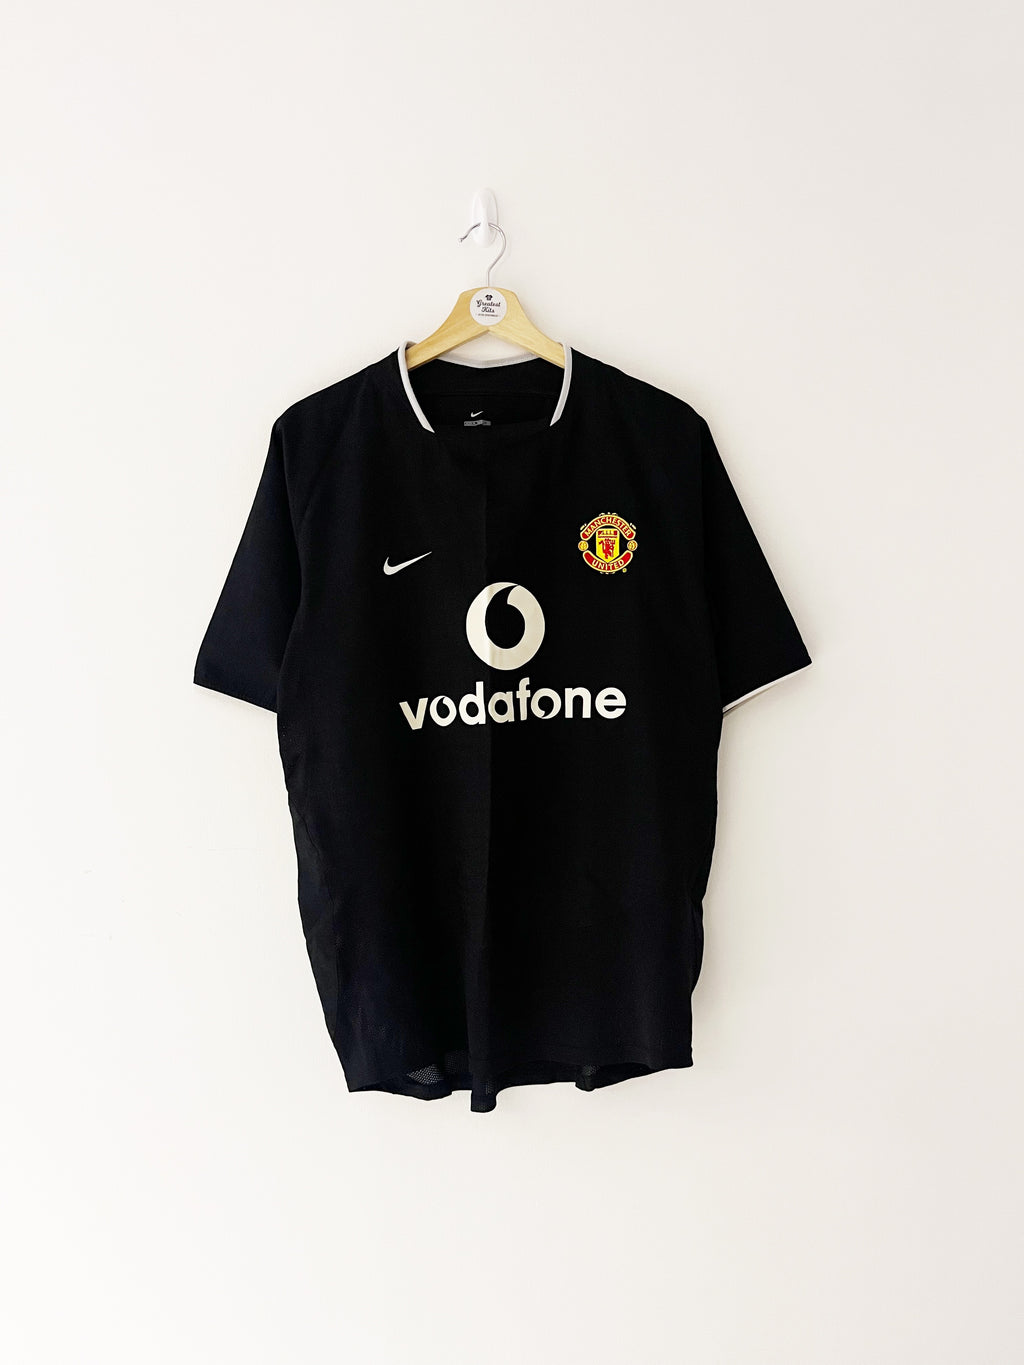 2003/05 Manchester United Away Shirt (M) 9.5/10